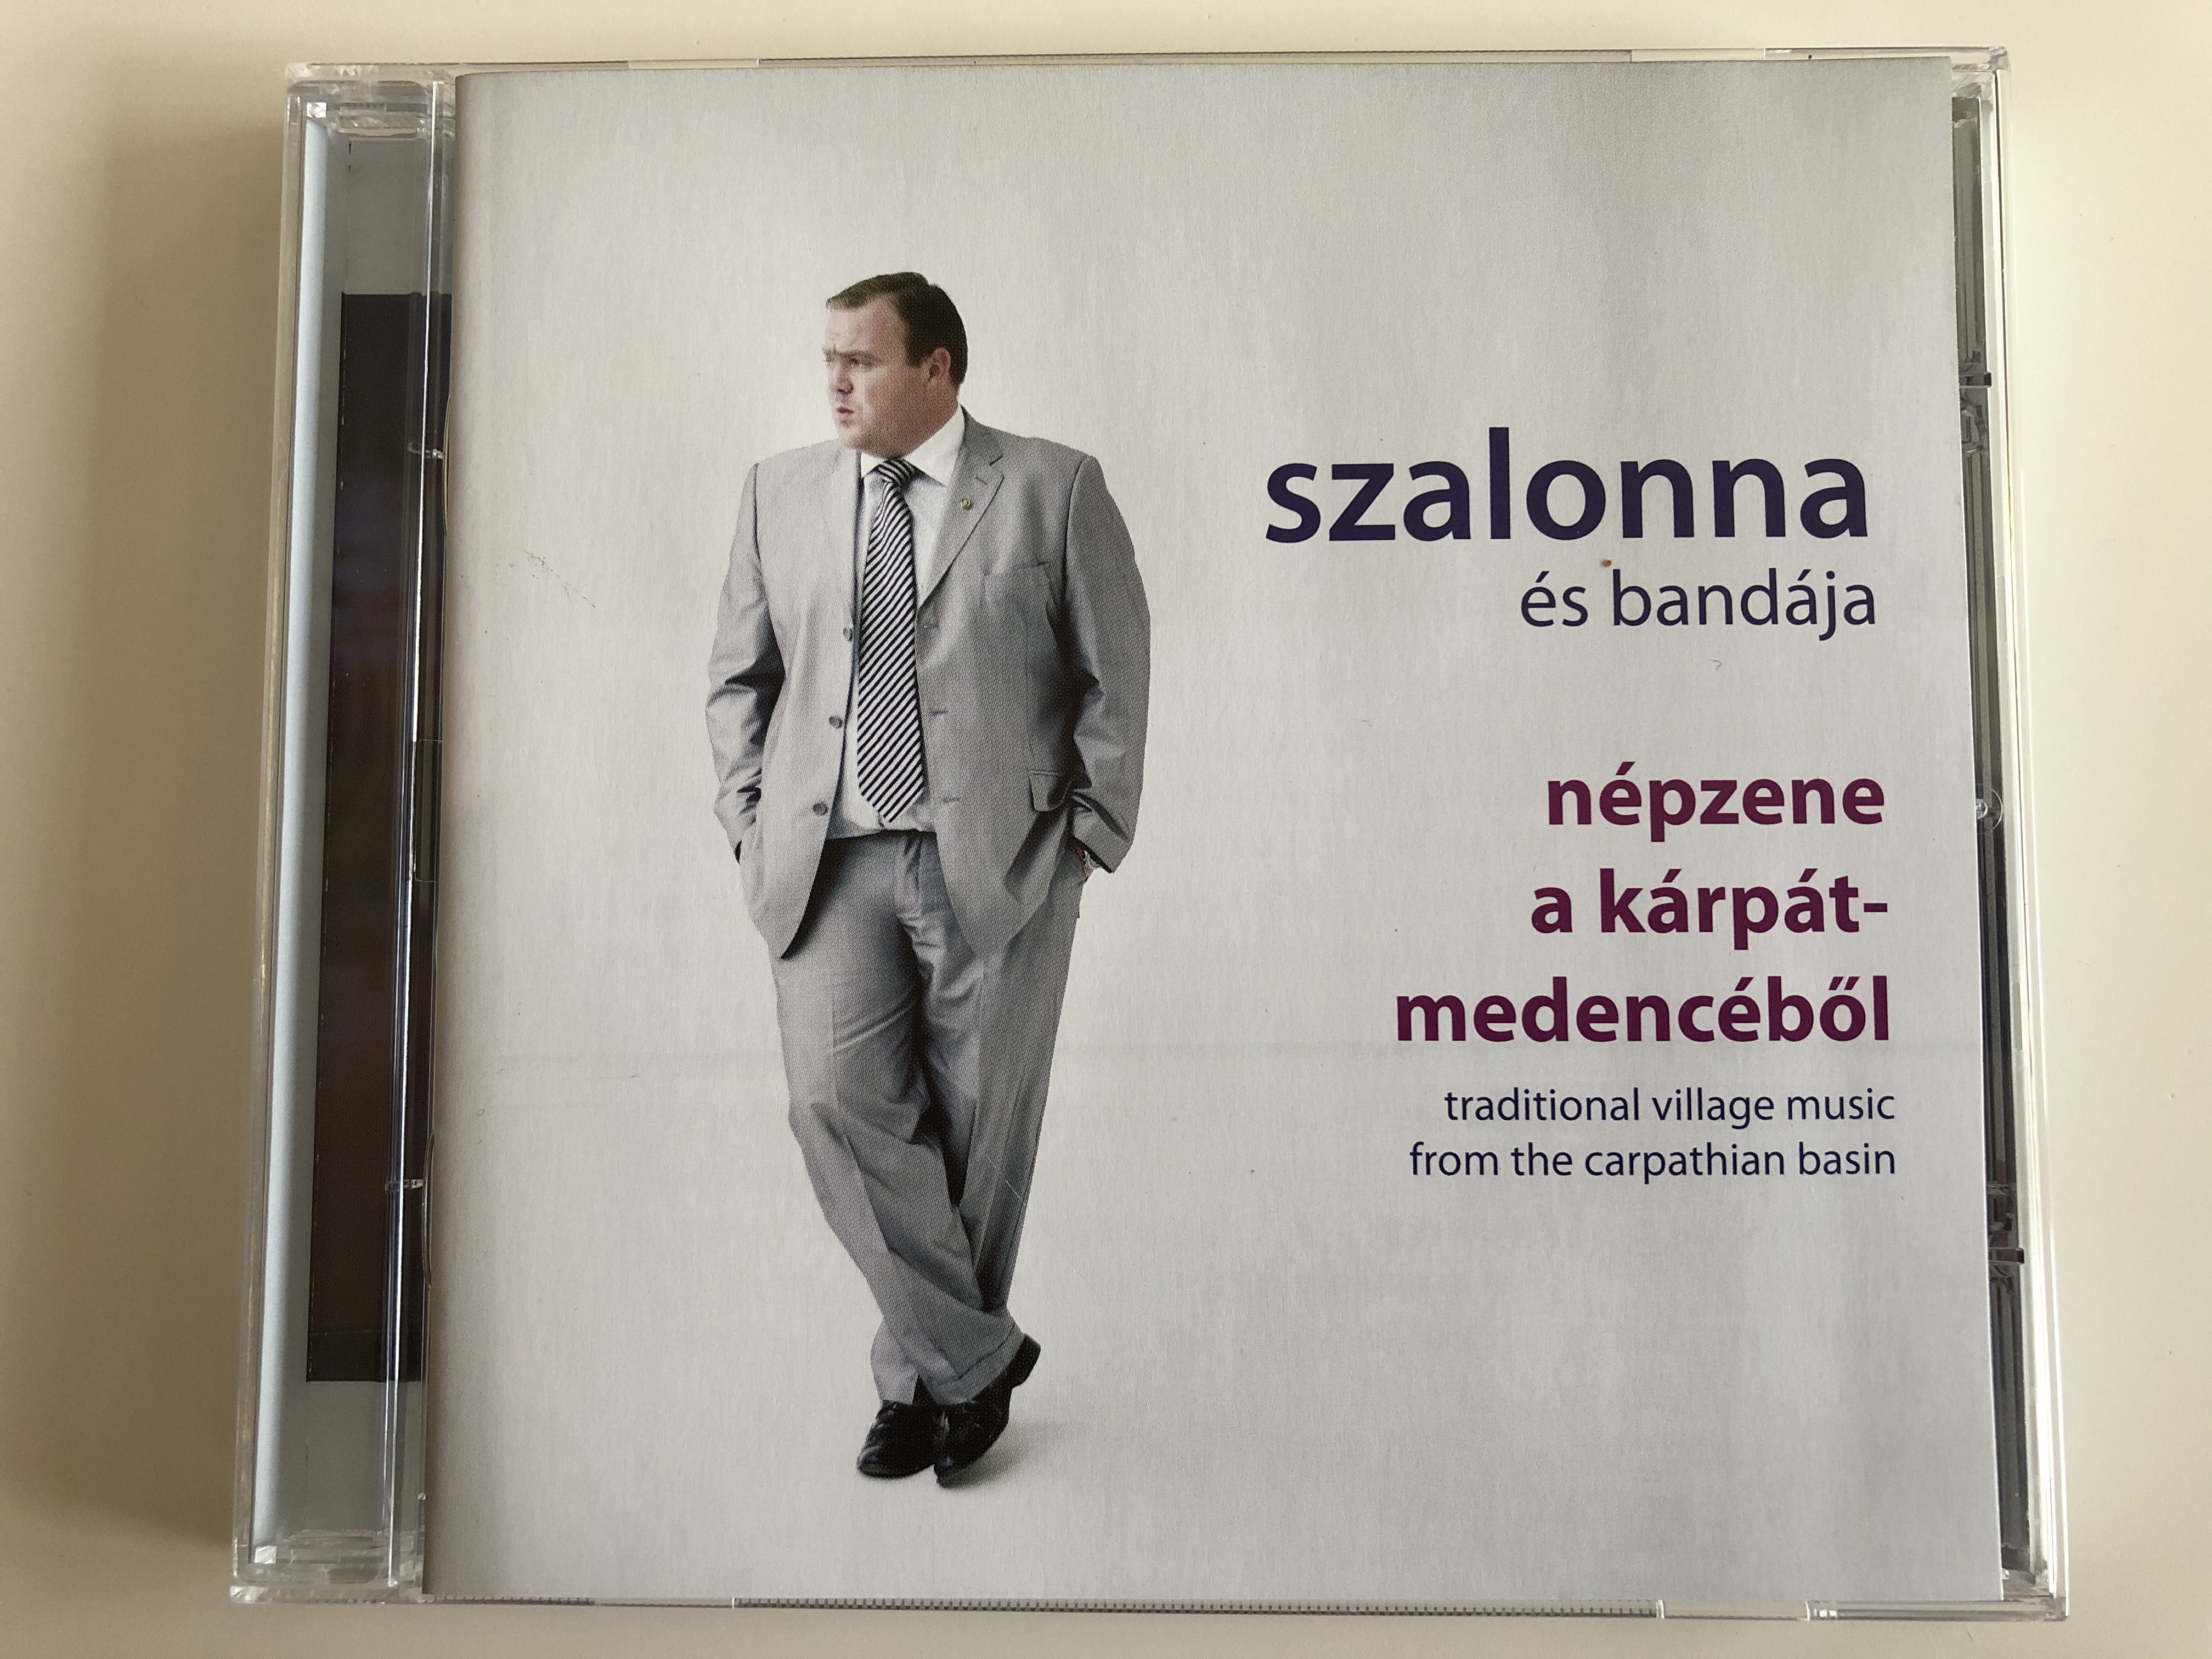 szalonna-s-band-ja-n-pzene-a-k-rp-t-medenc-b-l-traditional-village-music-from-the-carpathian-basin-folk-eur-pa-audio-cd-2010-fecd-051-1-.jpg